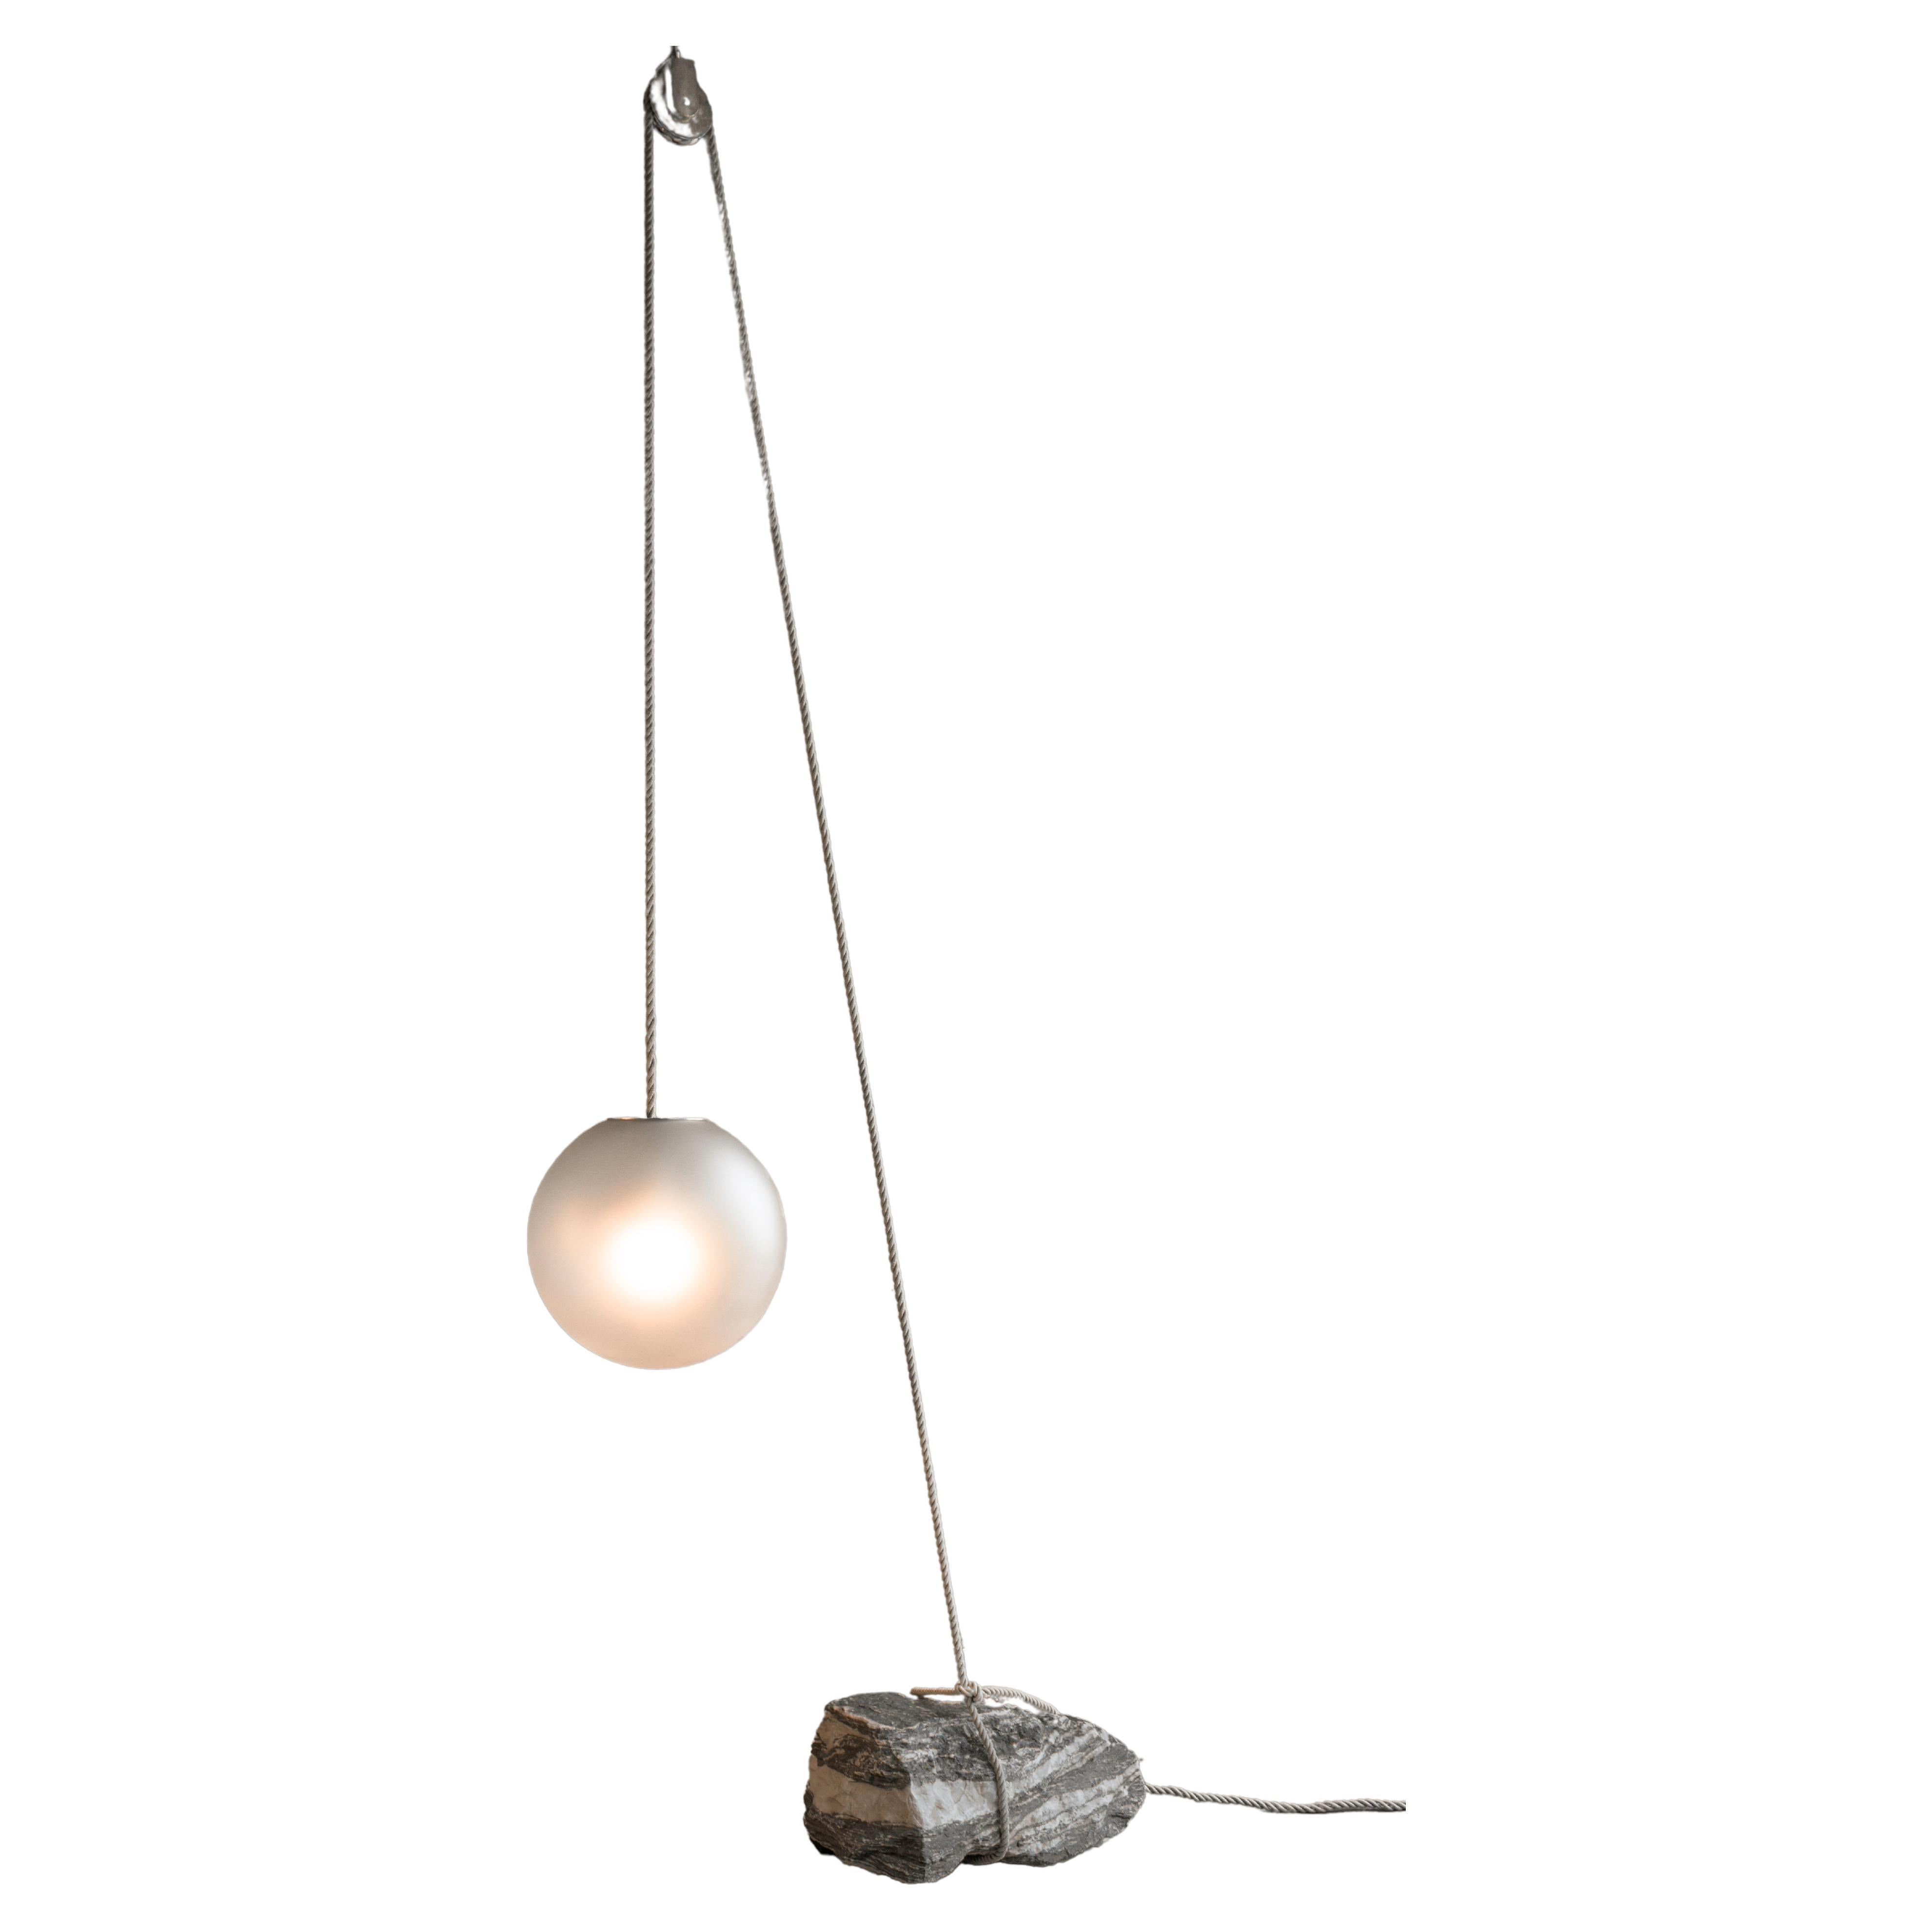 Lampadaire hollandais Beacon of Light D50 Glass Ball Sculptural Natural Stone Pendant Lamp